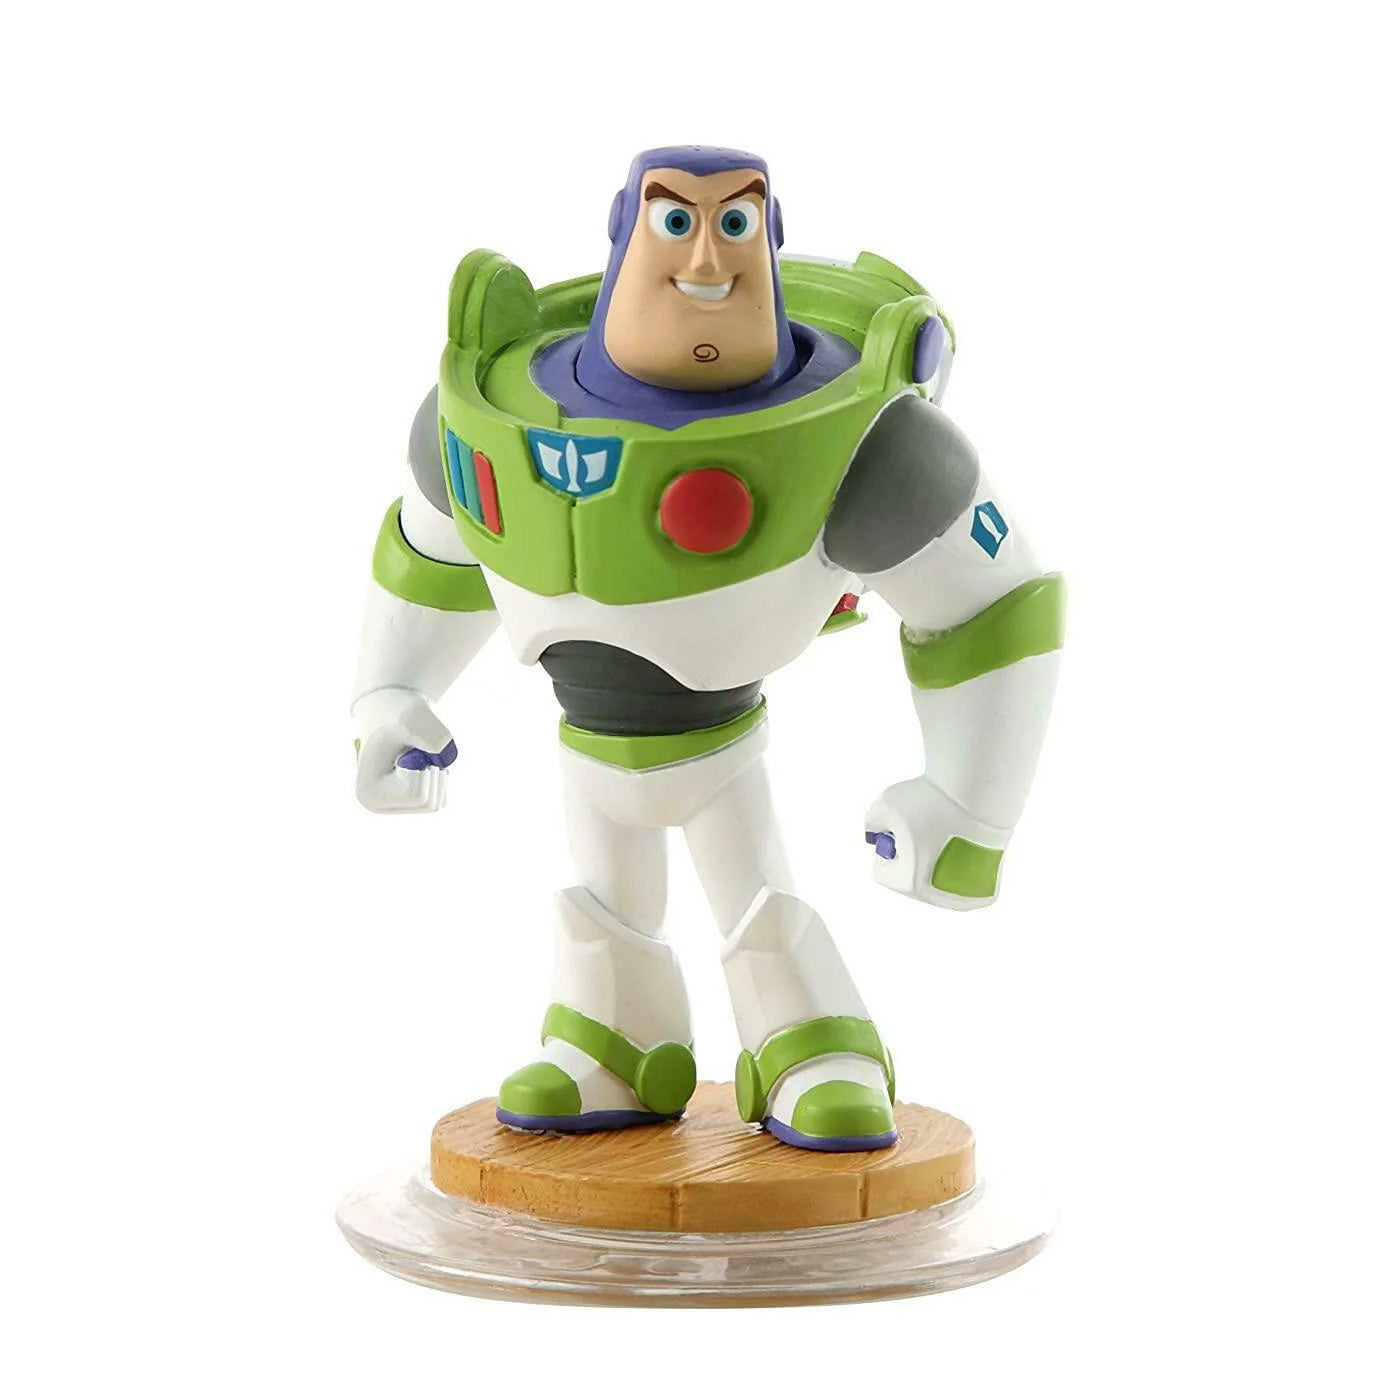 Disney Infinity 1.0 Character: Buzz Lightyear